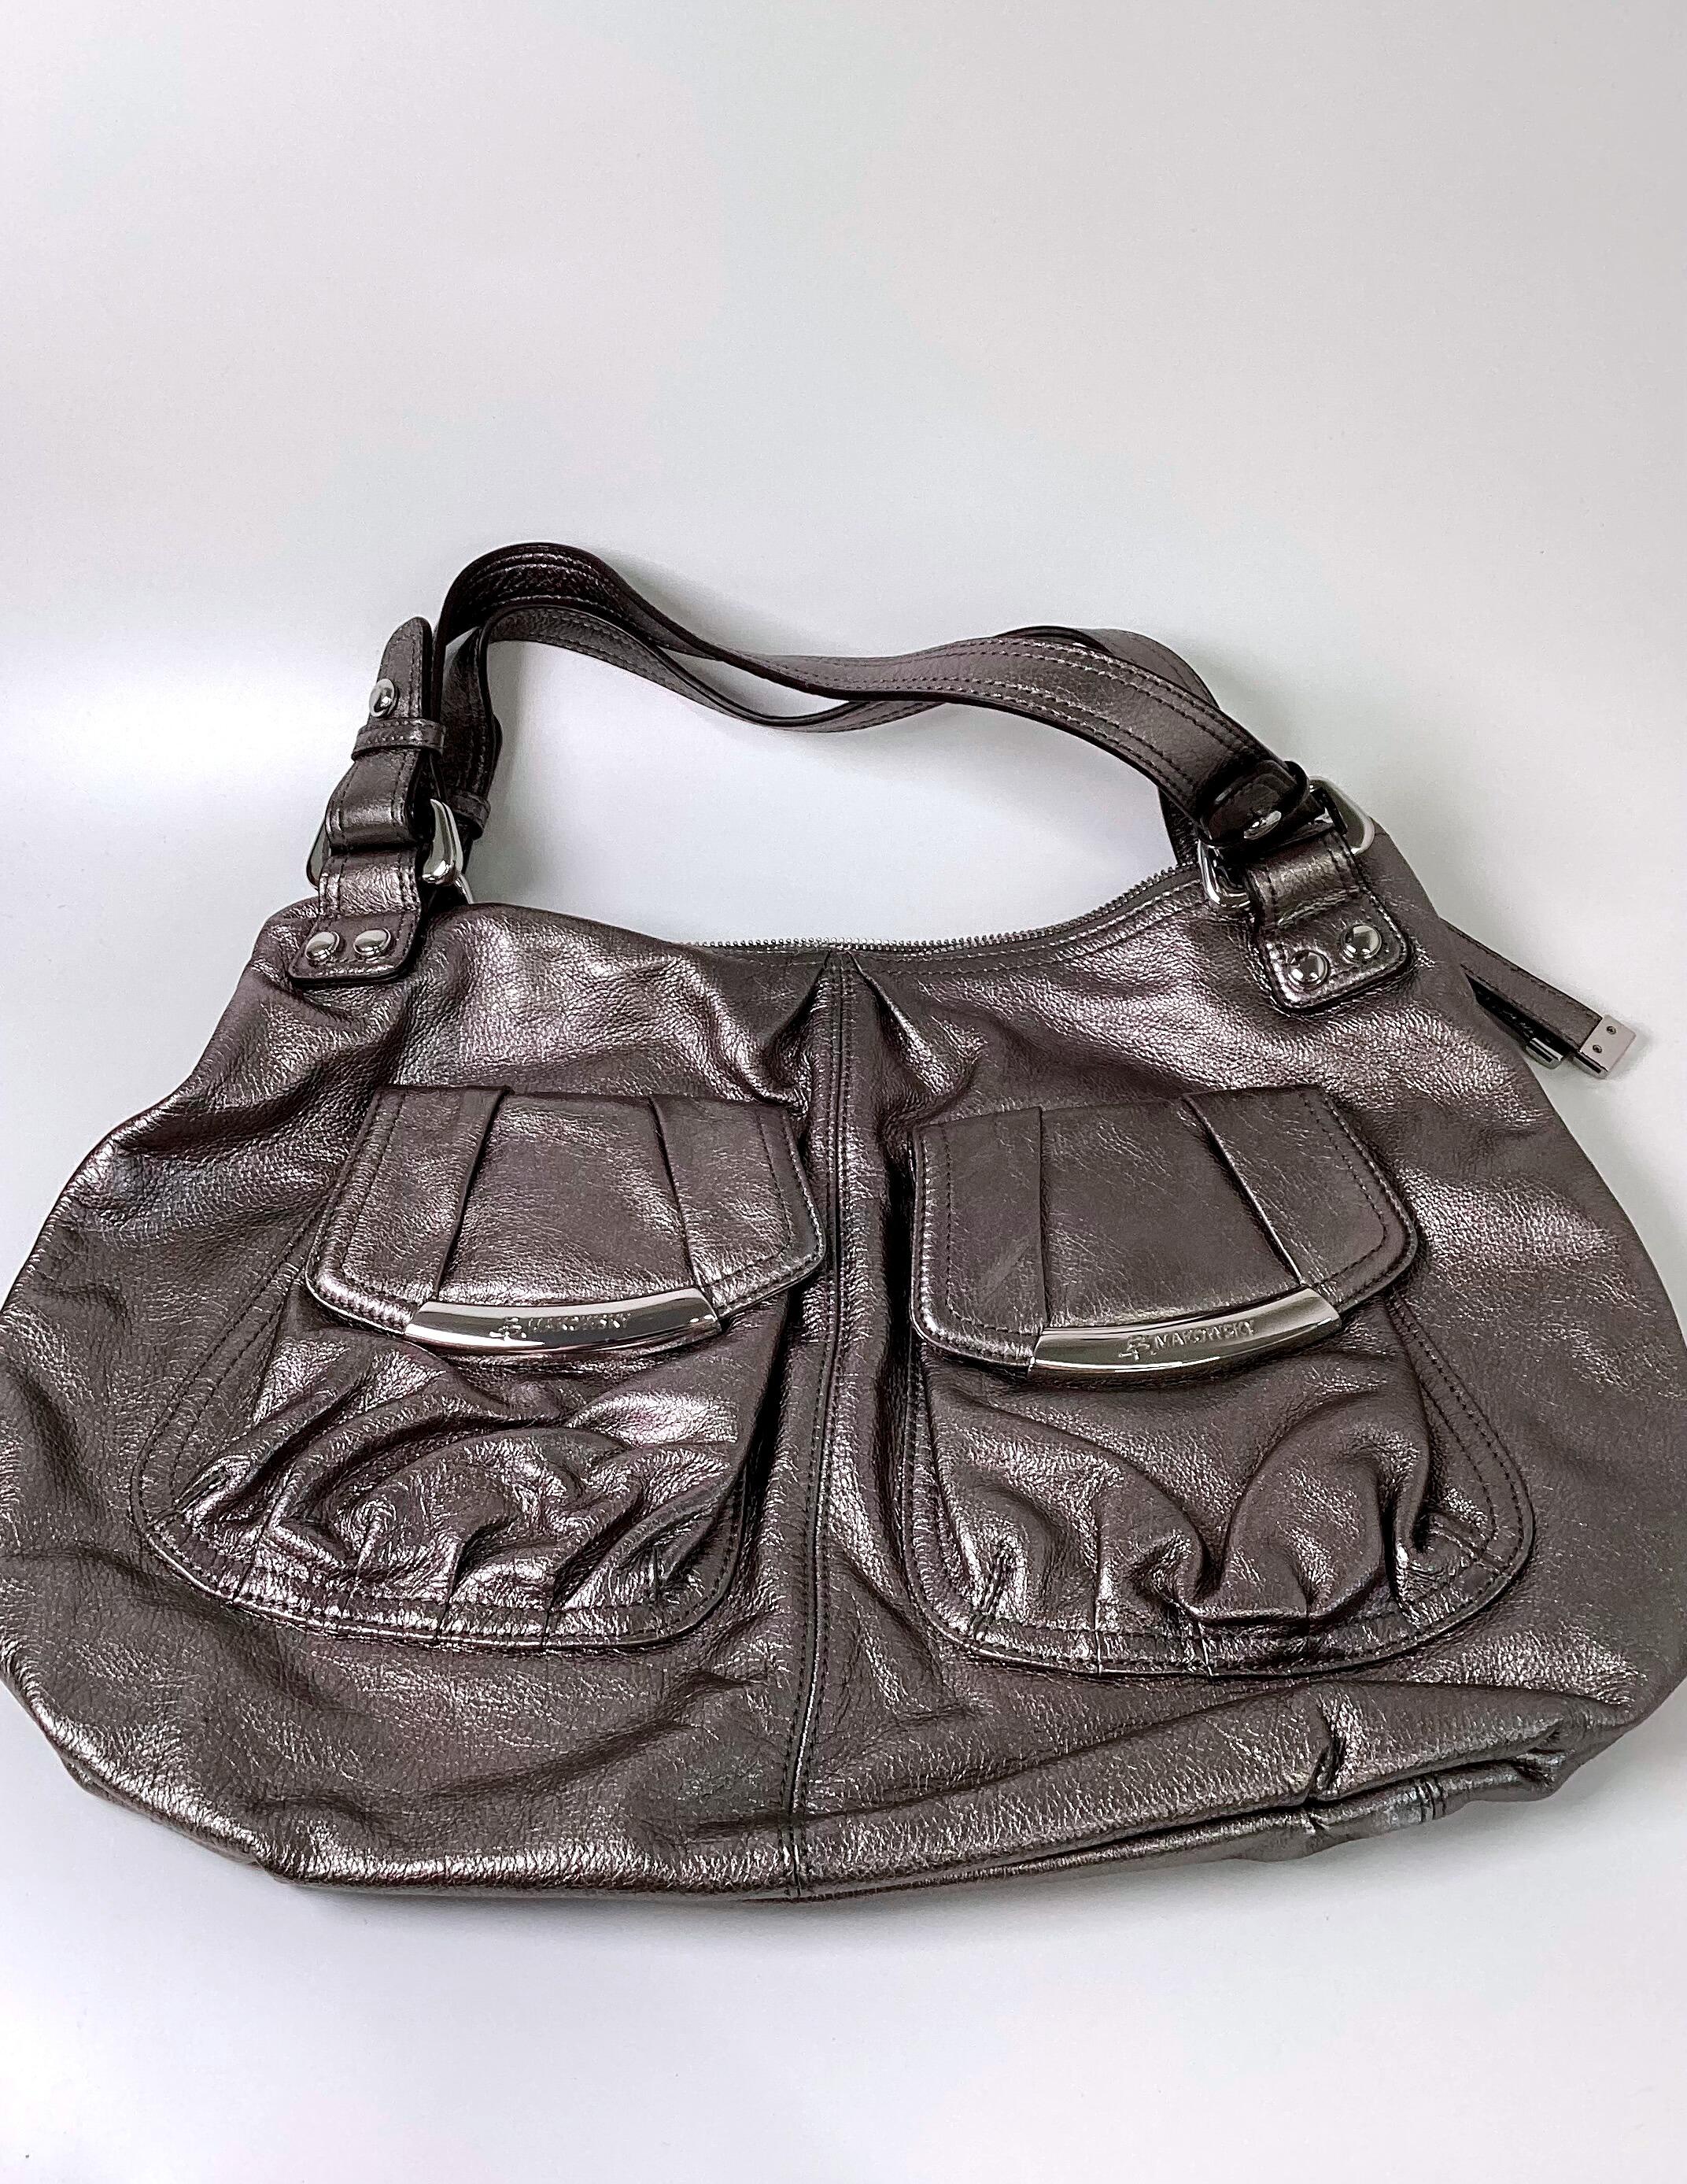 Jasper Conran London Darcey Leather Hobo Bag, Tan